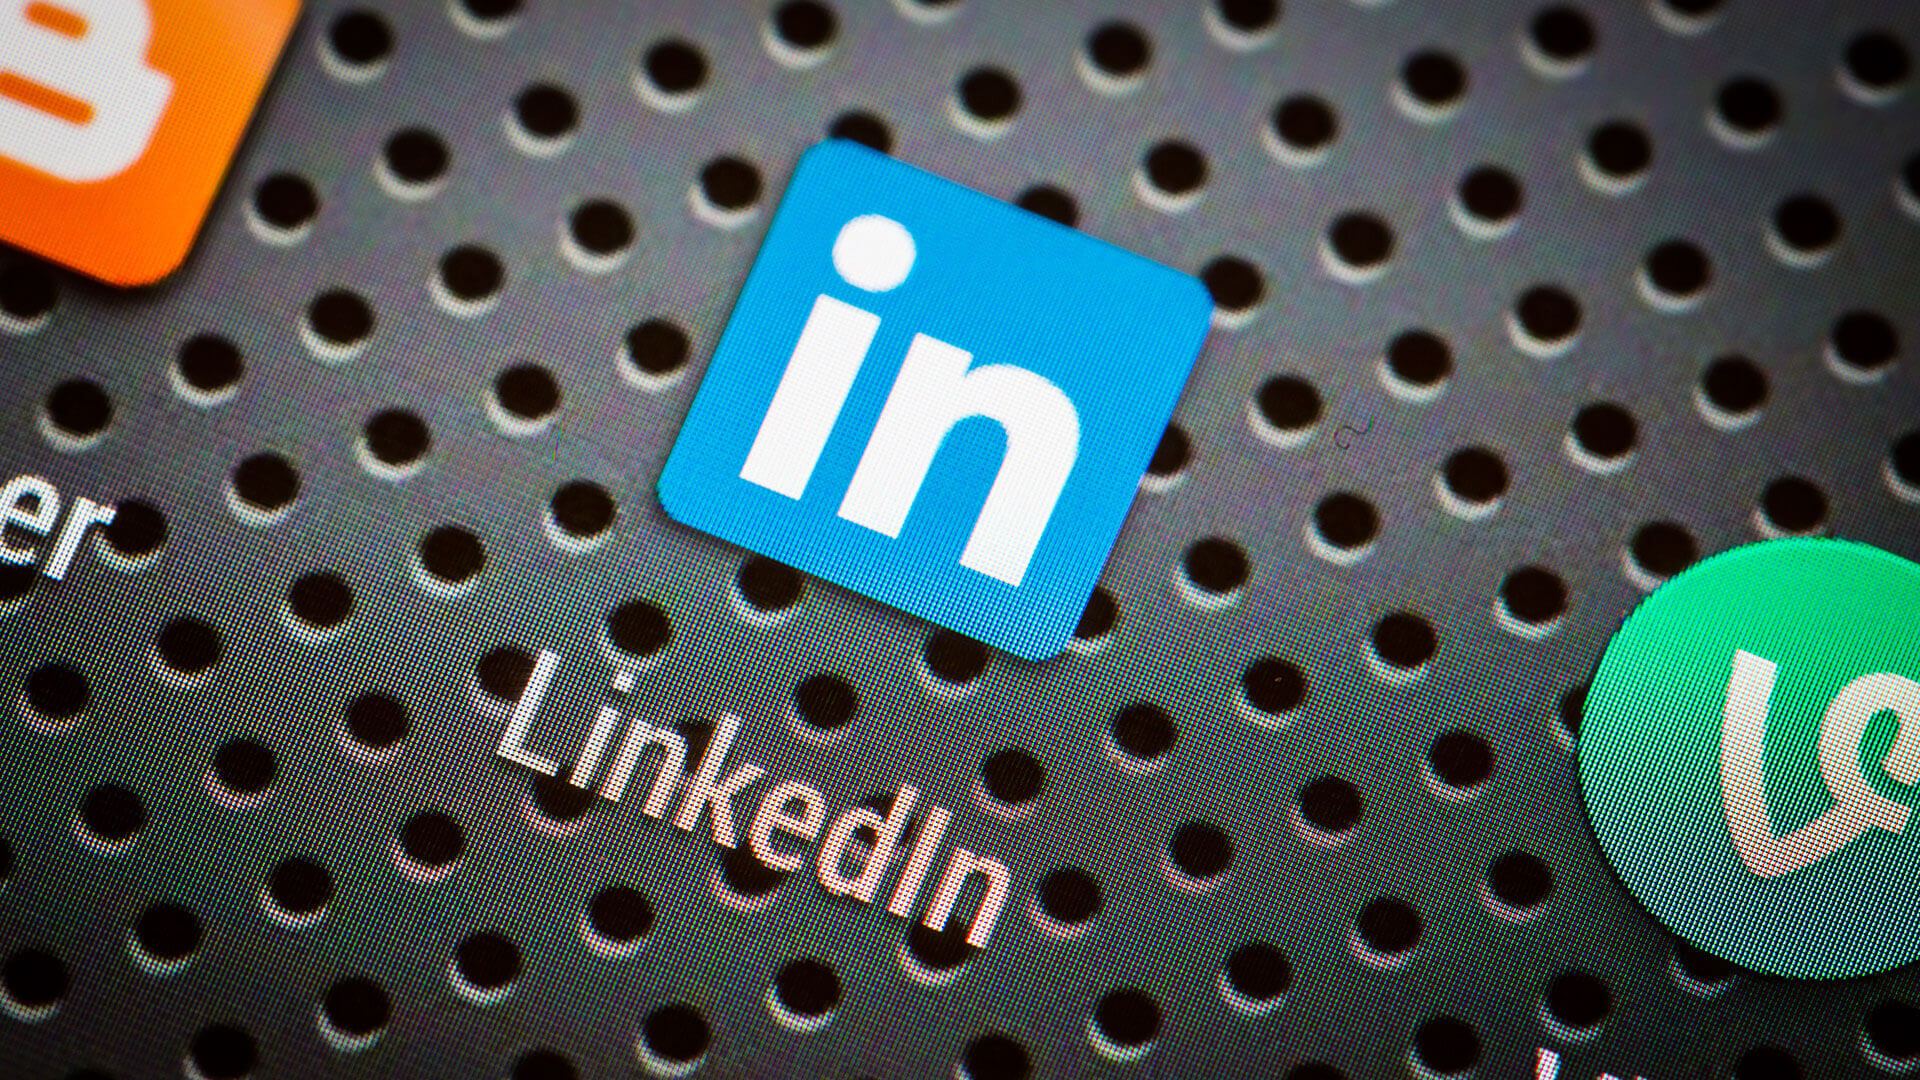 LinkedIn restores service after global outage